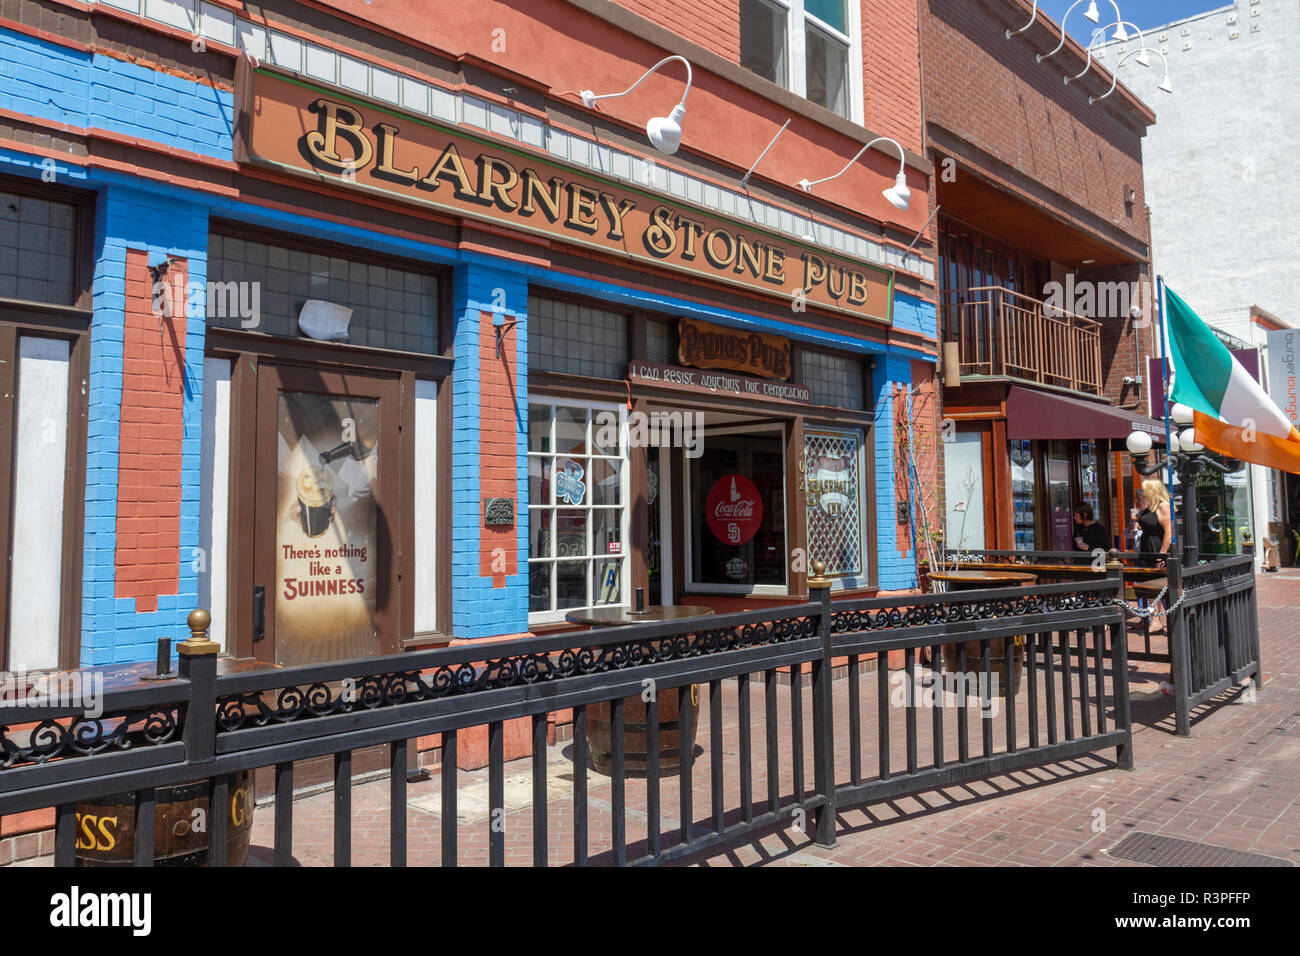 The Blarney Stone Pub in the Gaslamp Quarter, San Diego, California, United States, Stock Photo